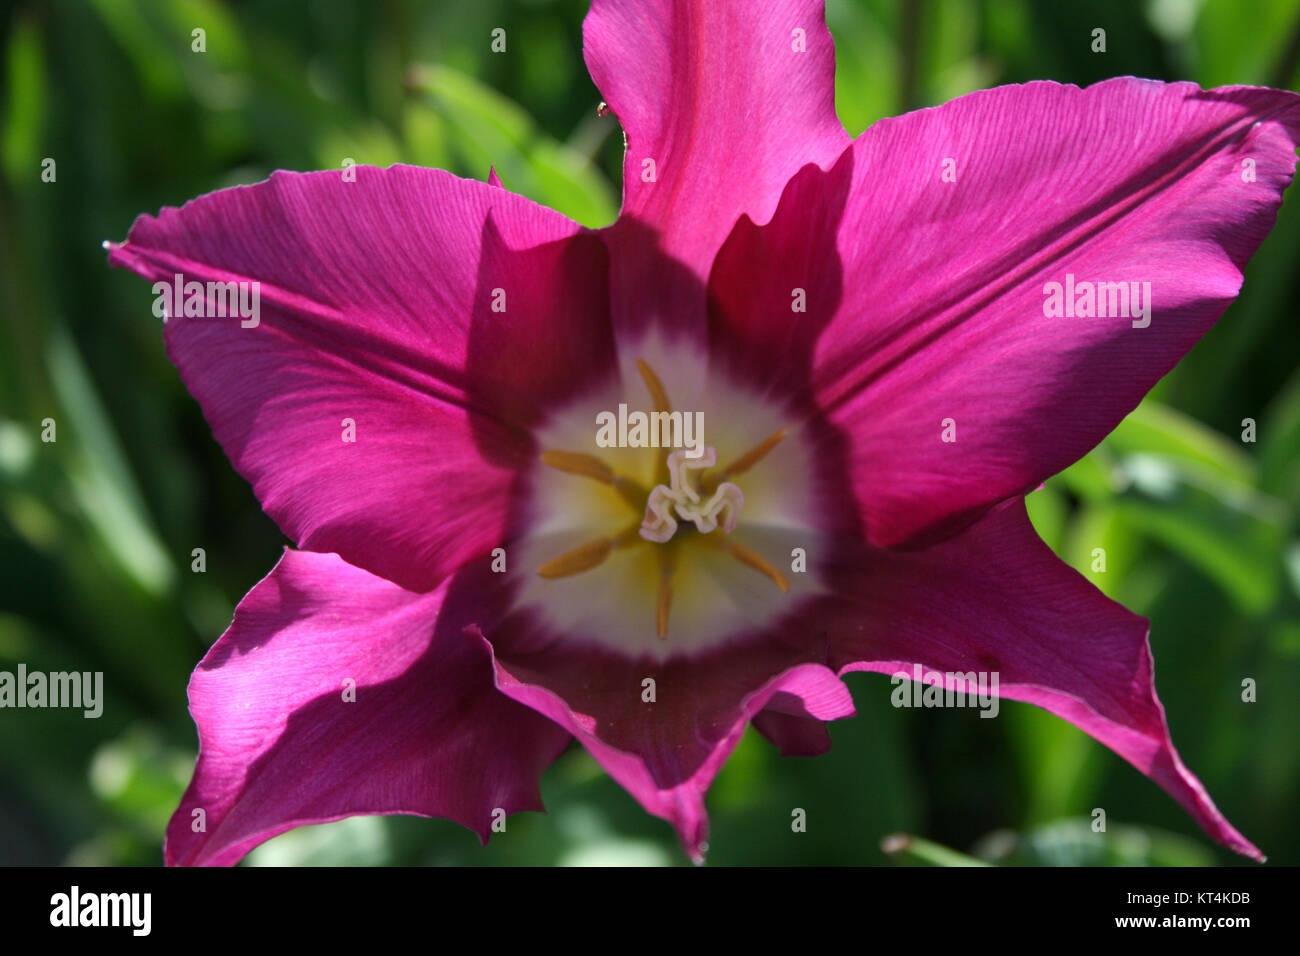 blooming fuchsia tulip lit by sunlight Stock Photo